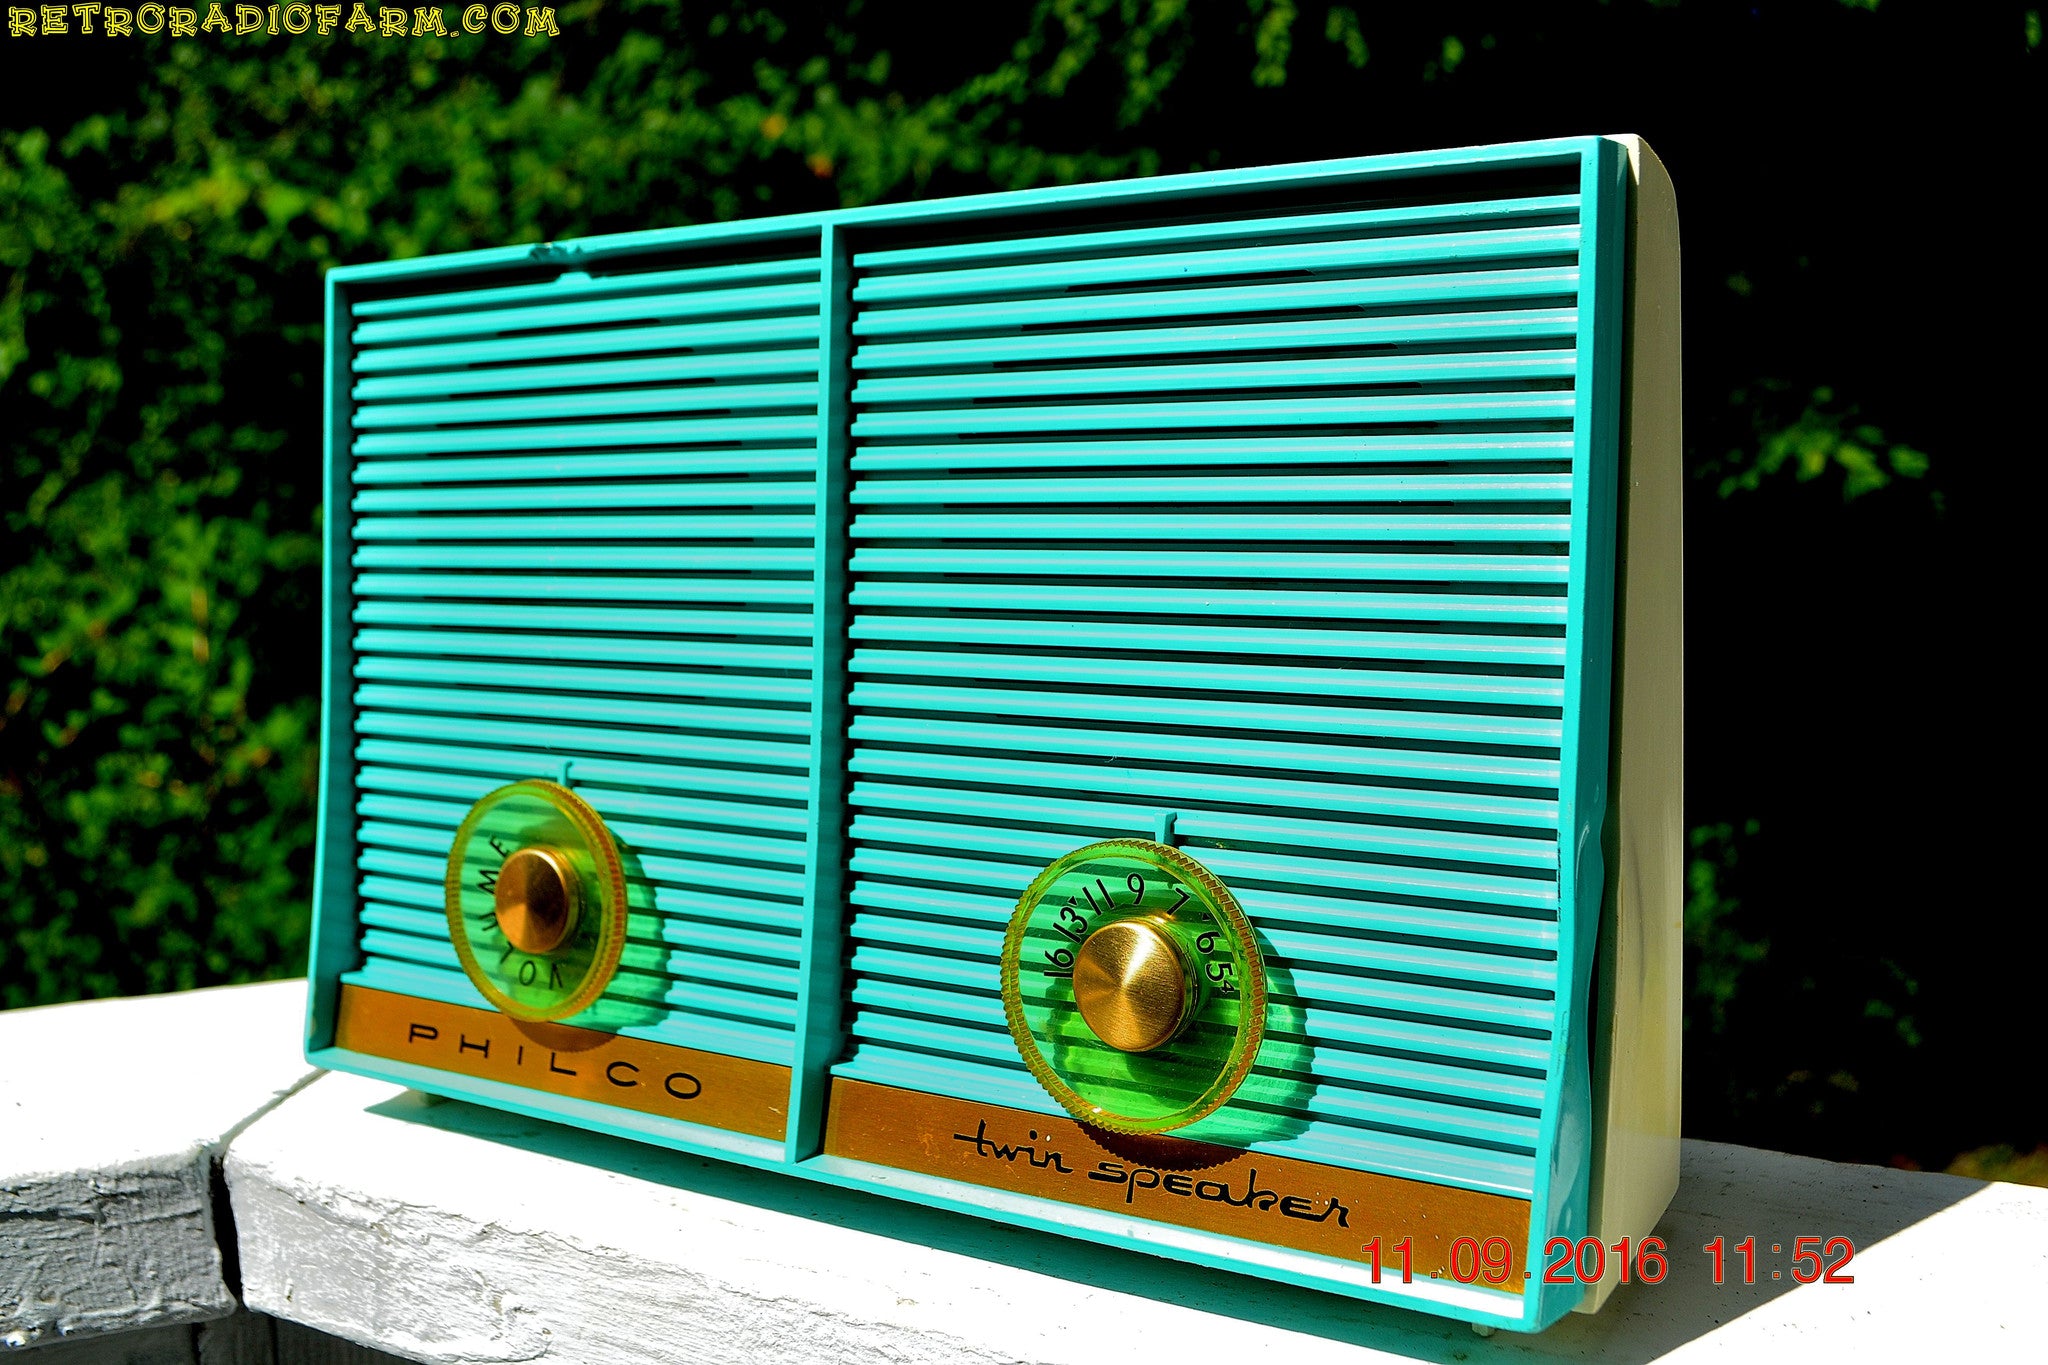 SOLD! - Dec 10. 2017 - TURQUOISE Twin Speaker Retro Vintage 1959 Philco Model J-845-124 AM Tube Radio Totally Restored! - [product_type} - Philco - Retro Radio Farm